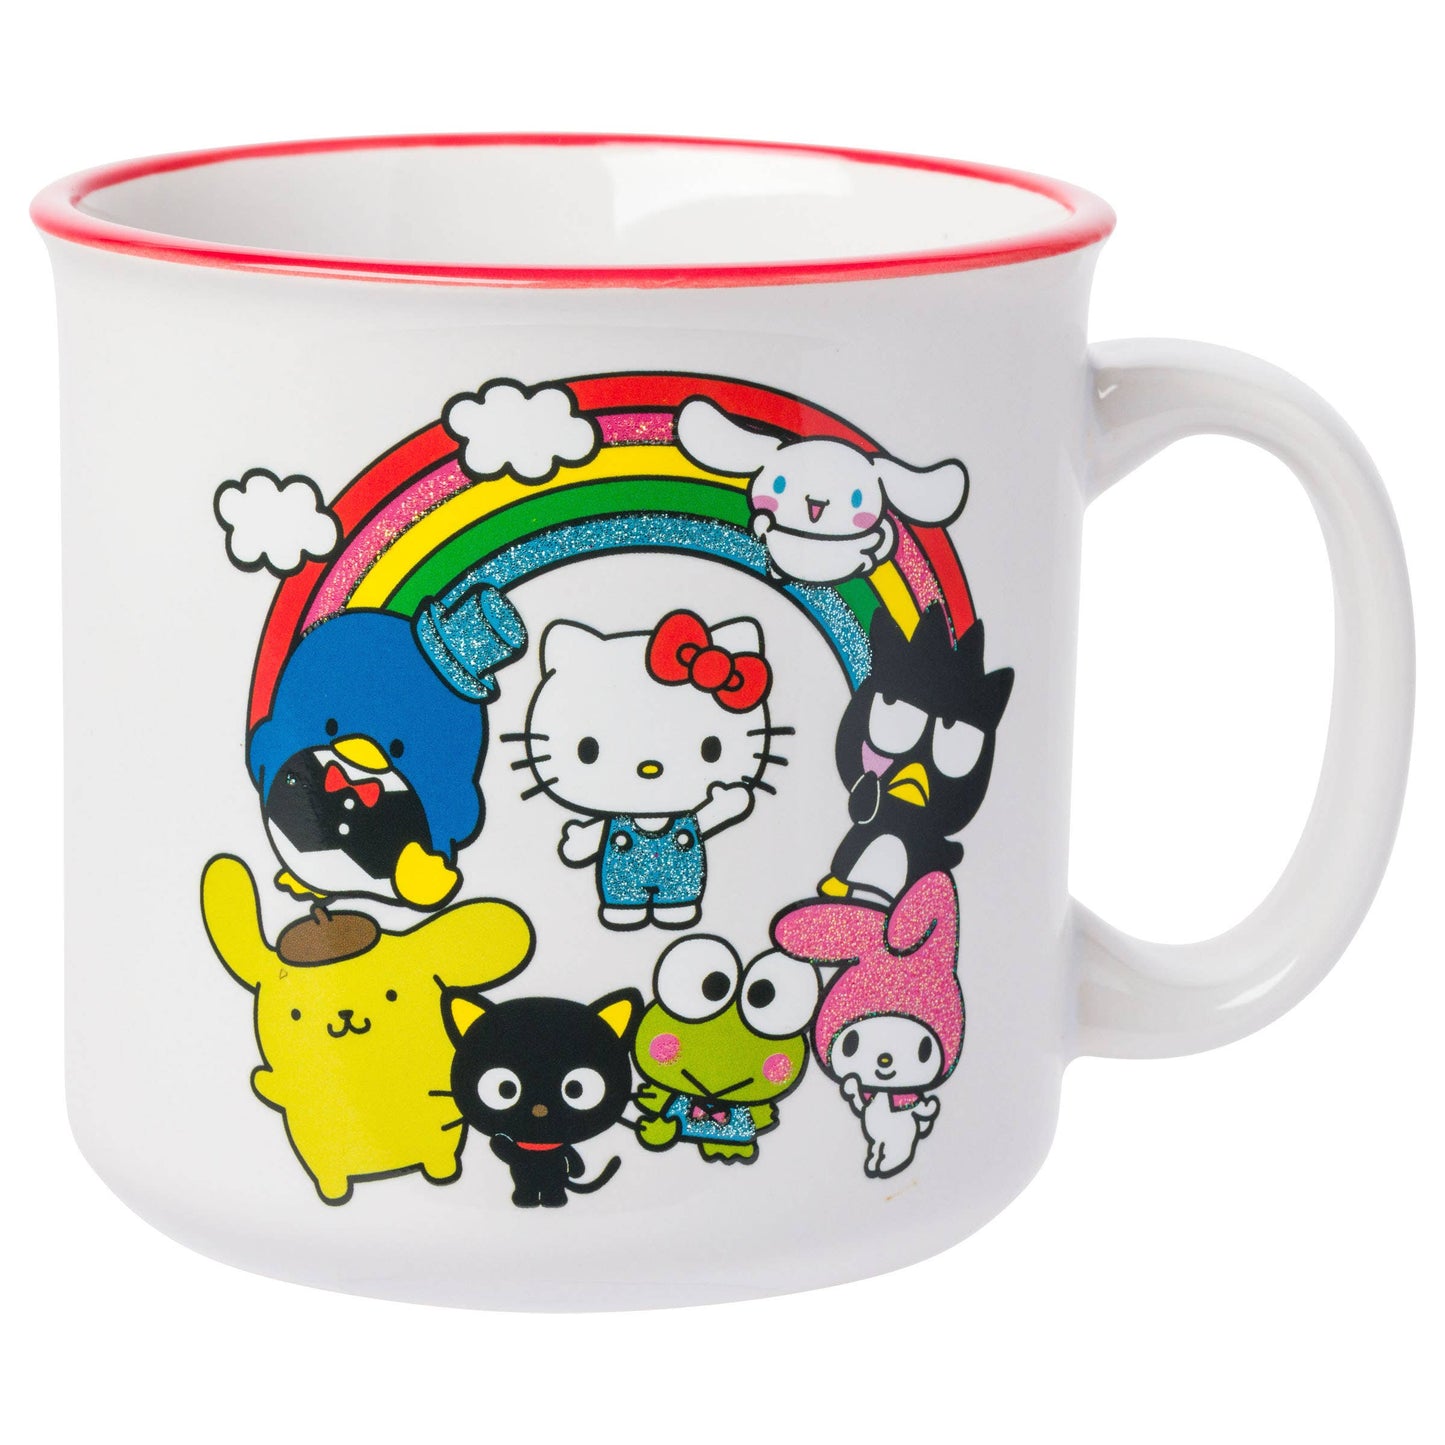 Hello Kitty and Friends Mug